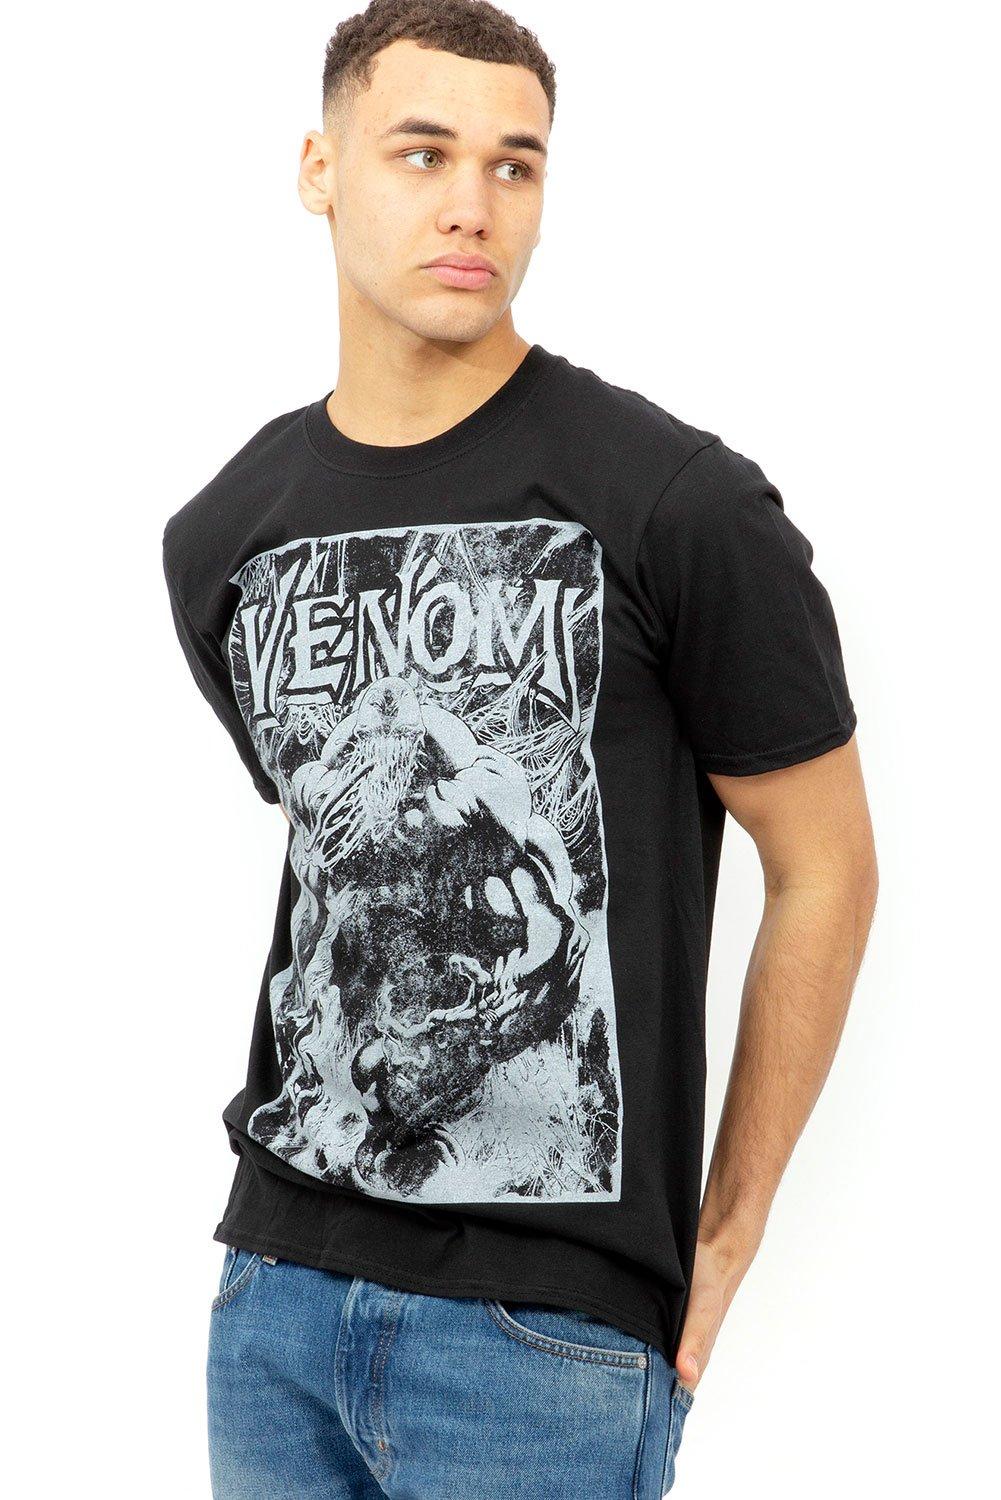 Хлопковая футболка Venom Web Marvel, черный хлопковая футболка venom antihero marvel черный